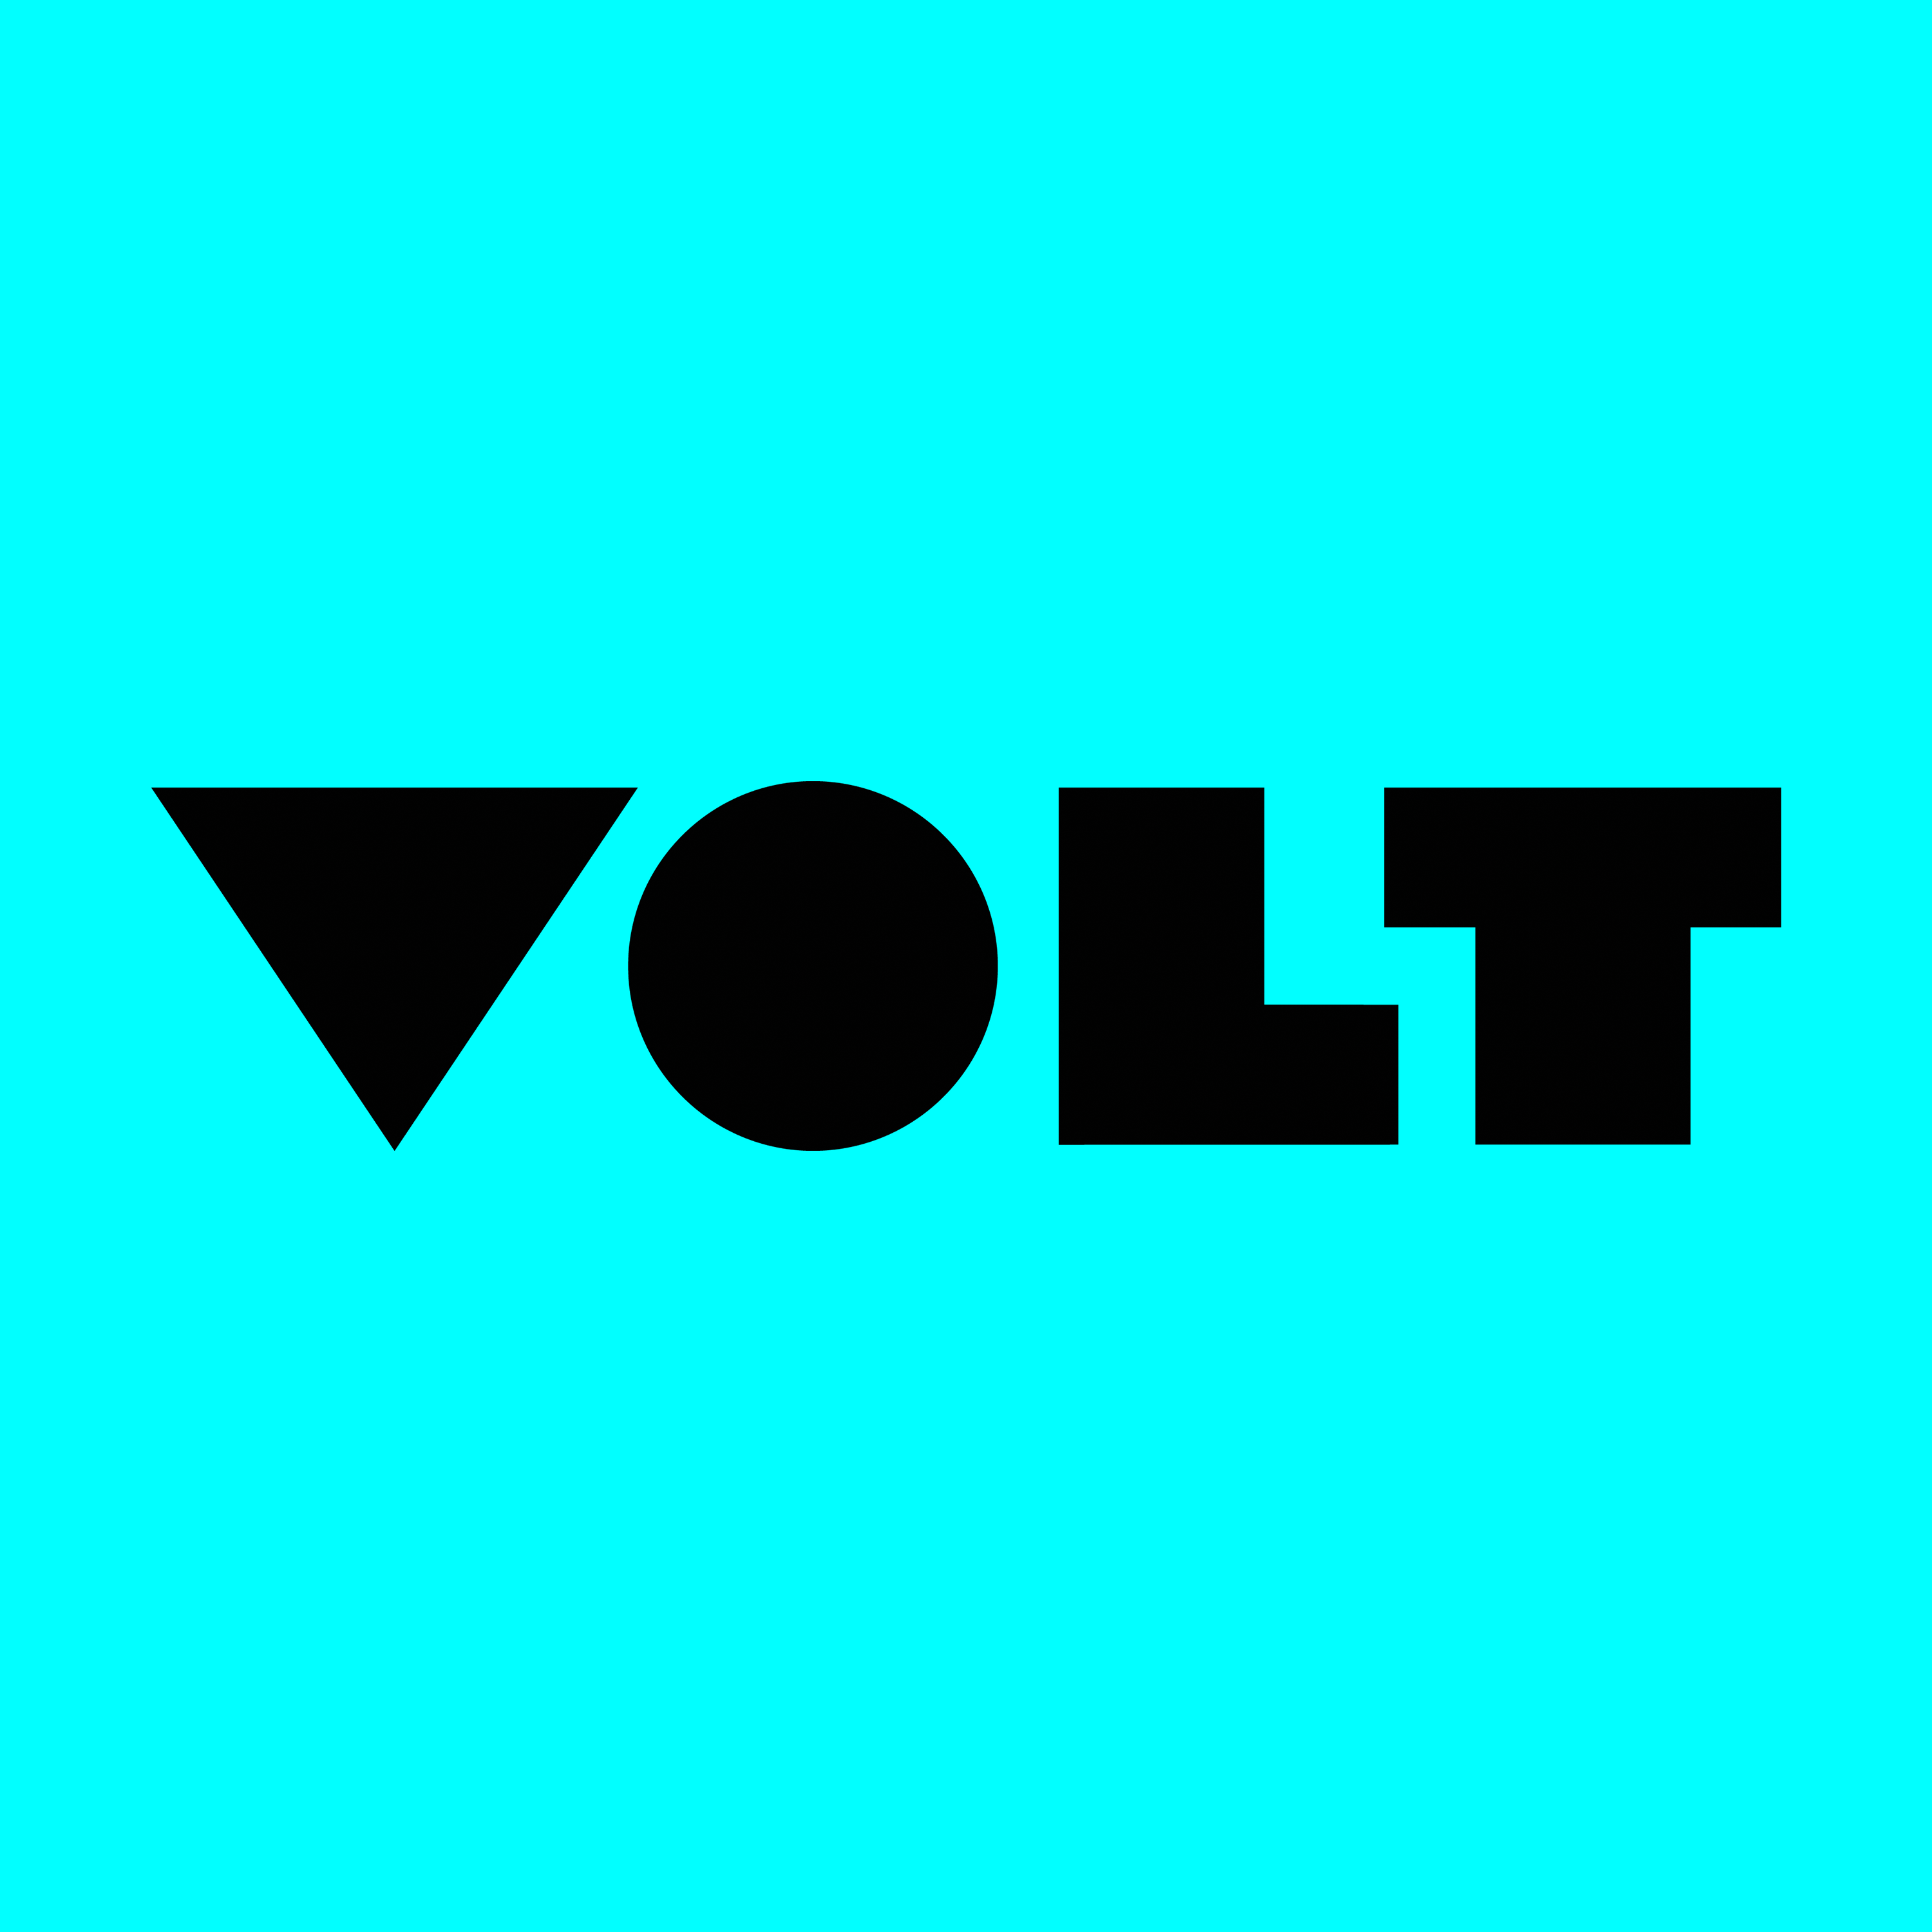 Volt Bank announces abrupt closure 